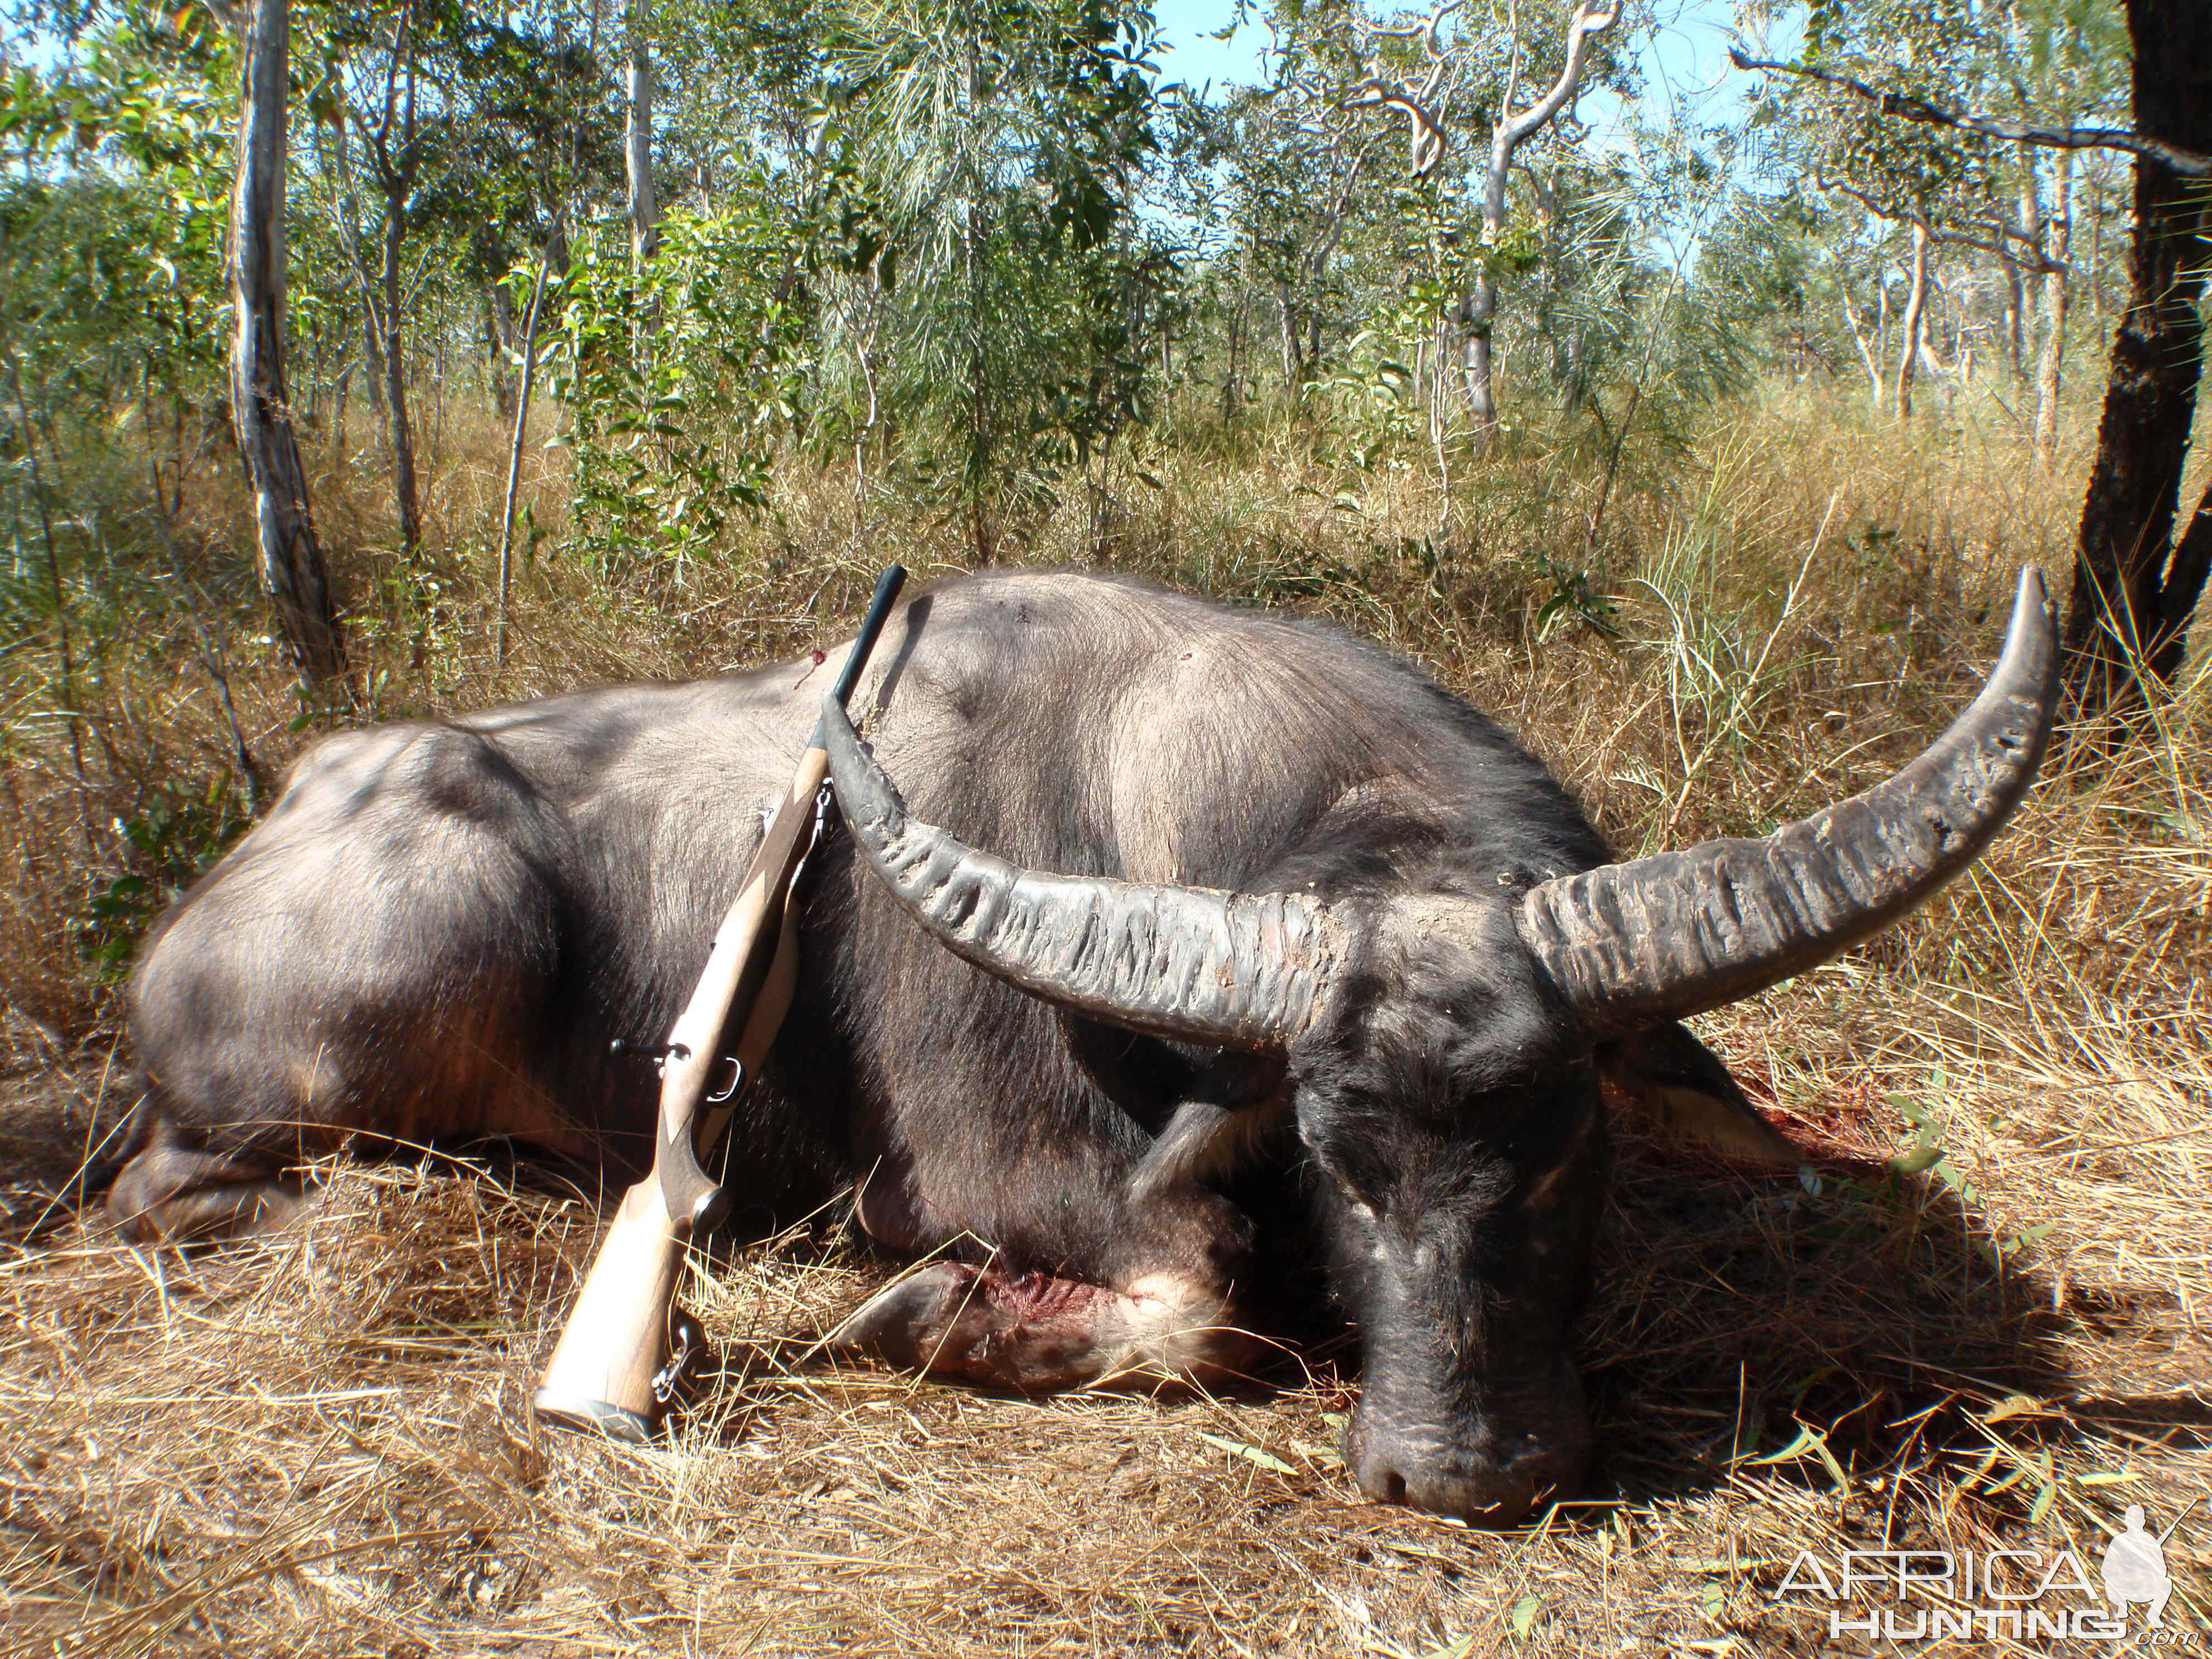 kort handling kun Asiatic Water Buffalo Hunting Australia | AfricaHunting.com